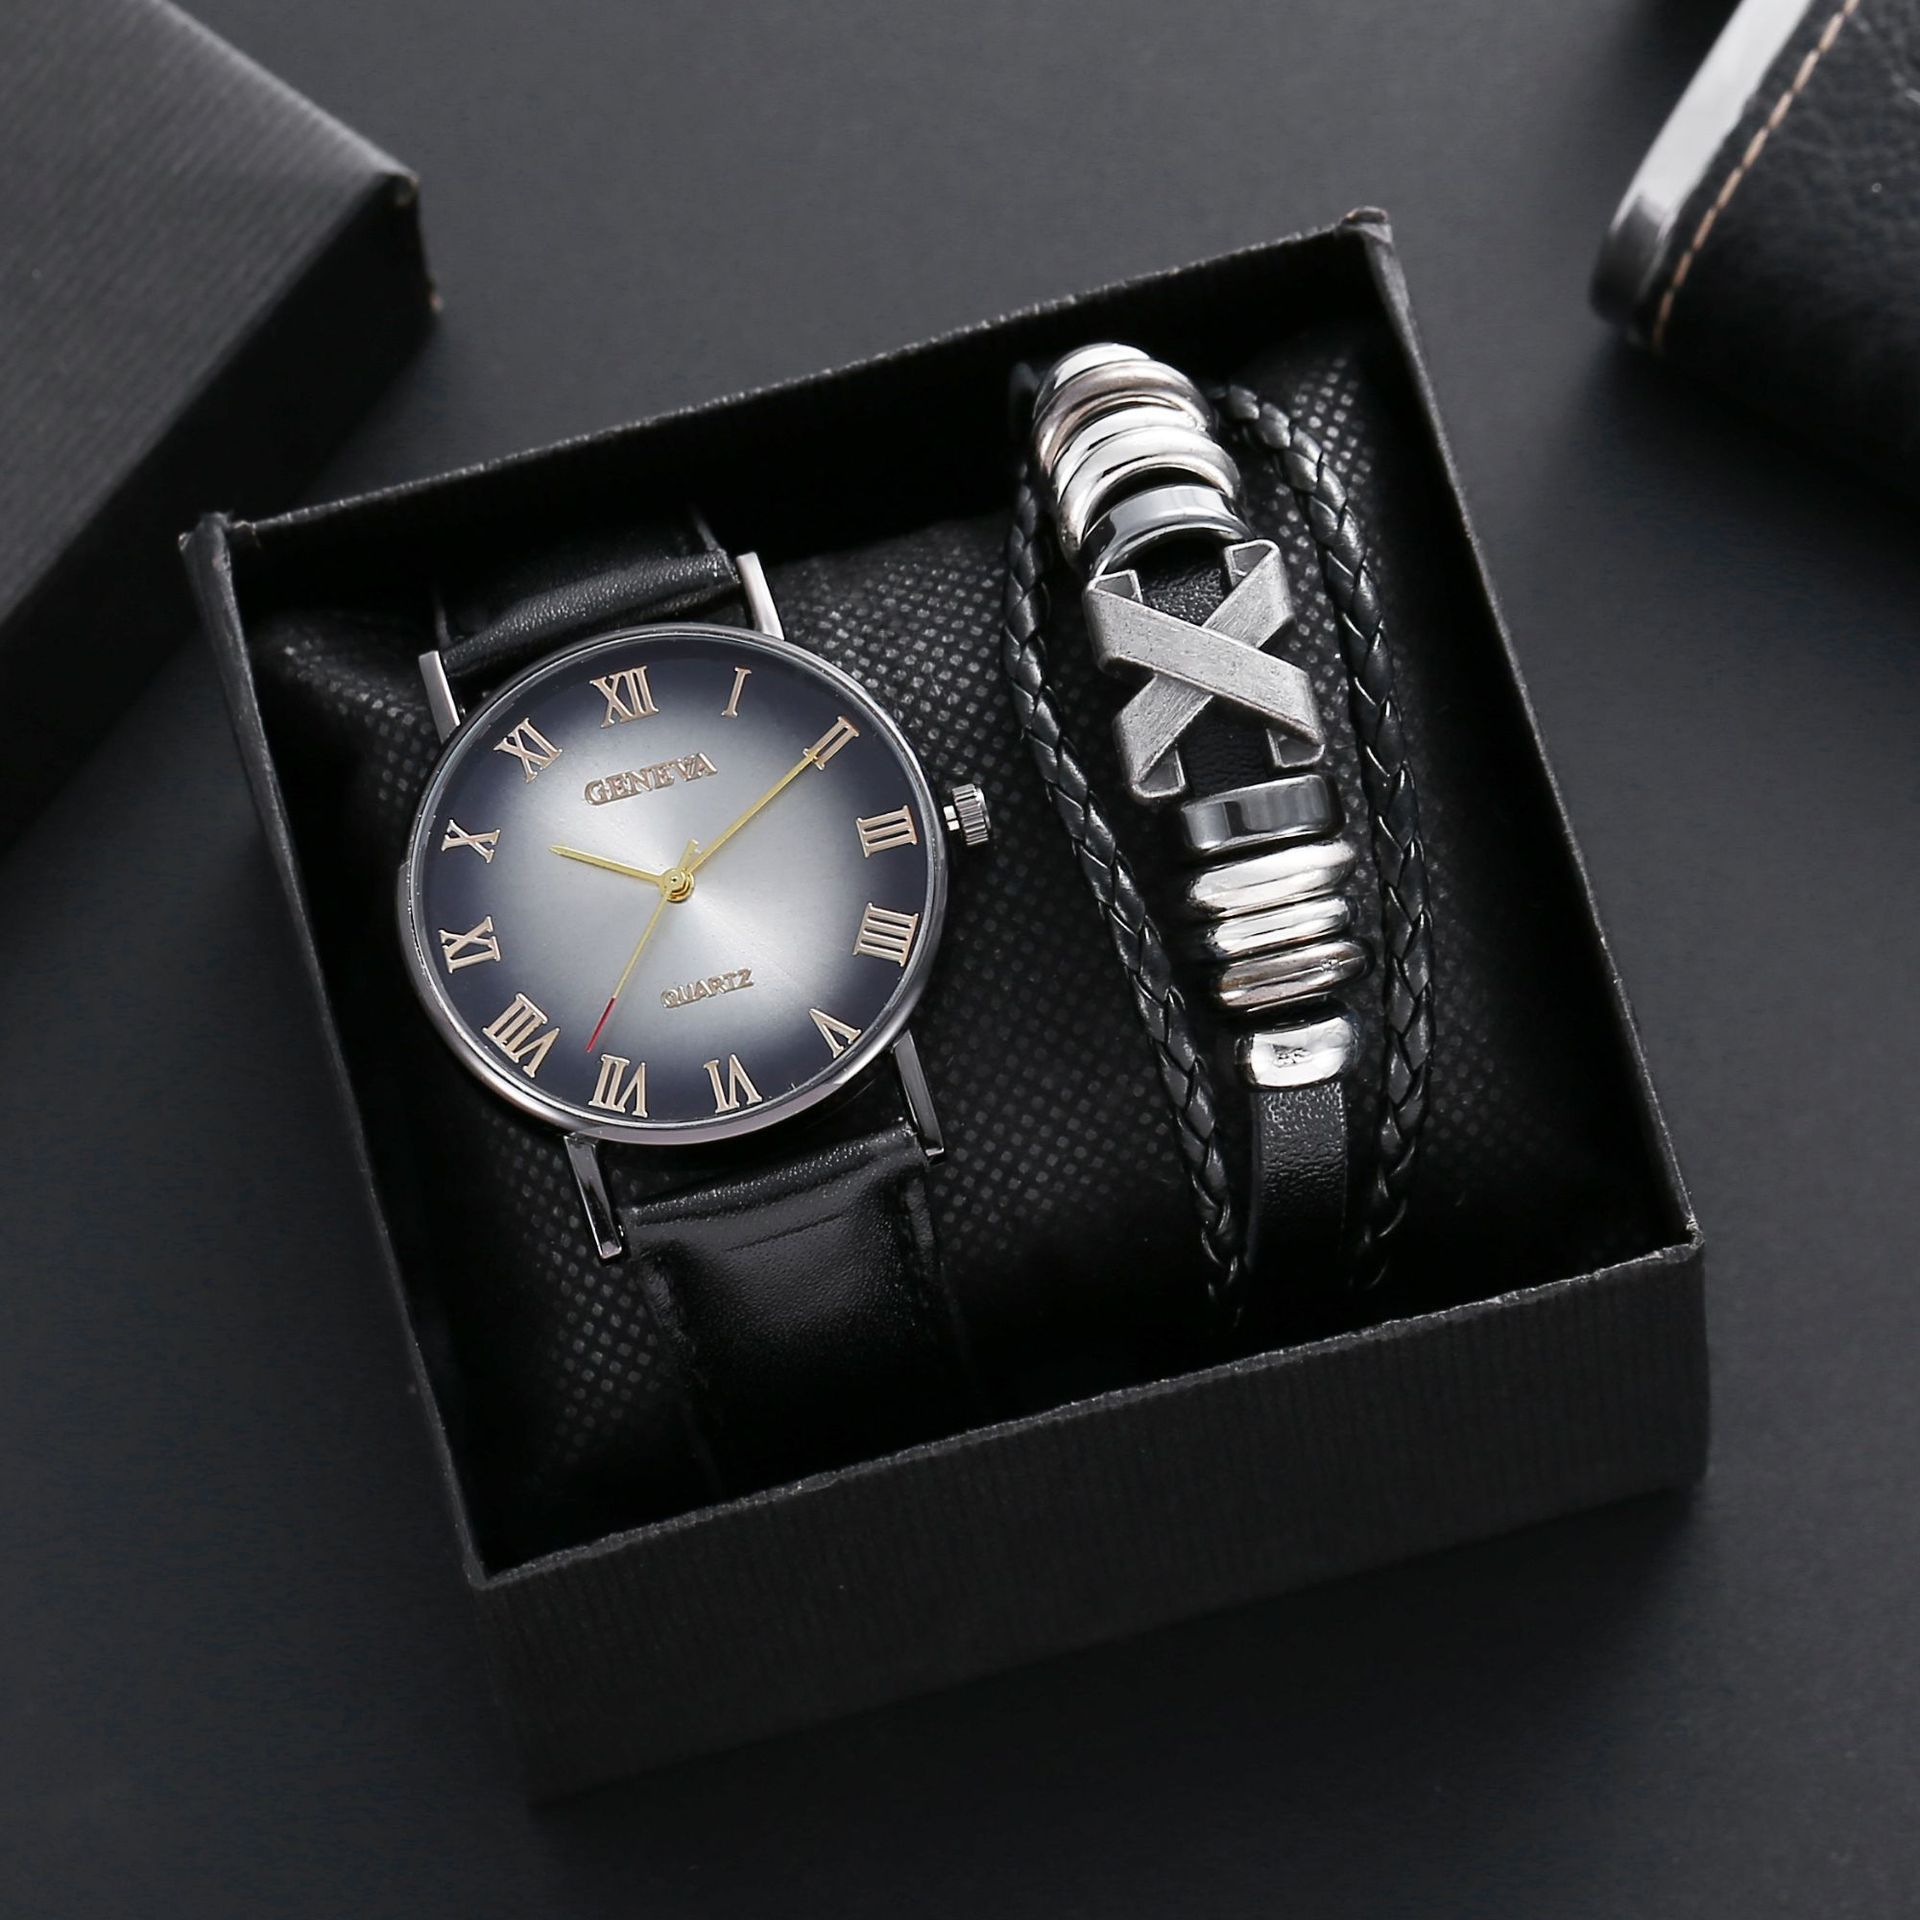 G watch, bracelet and box